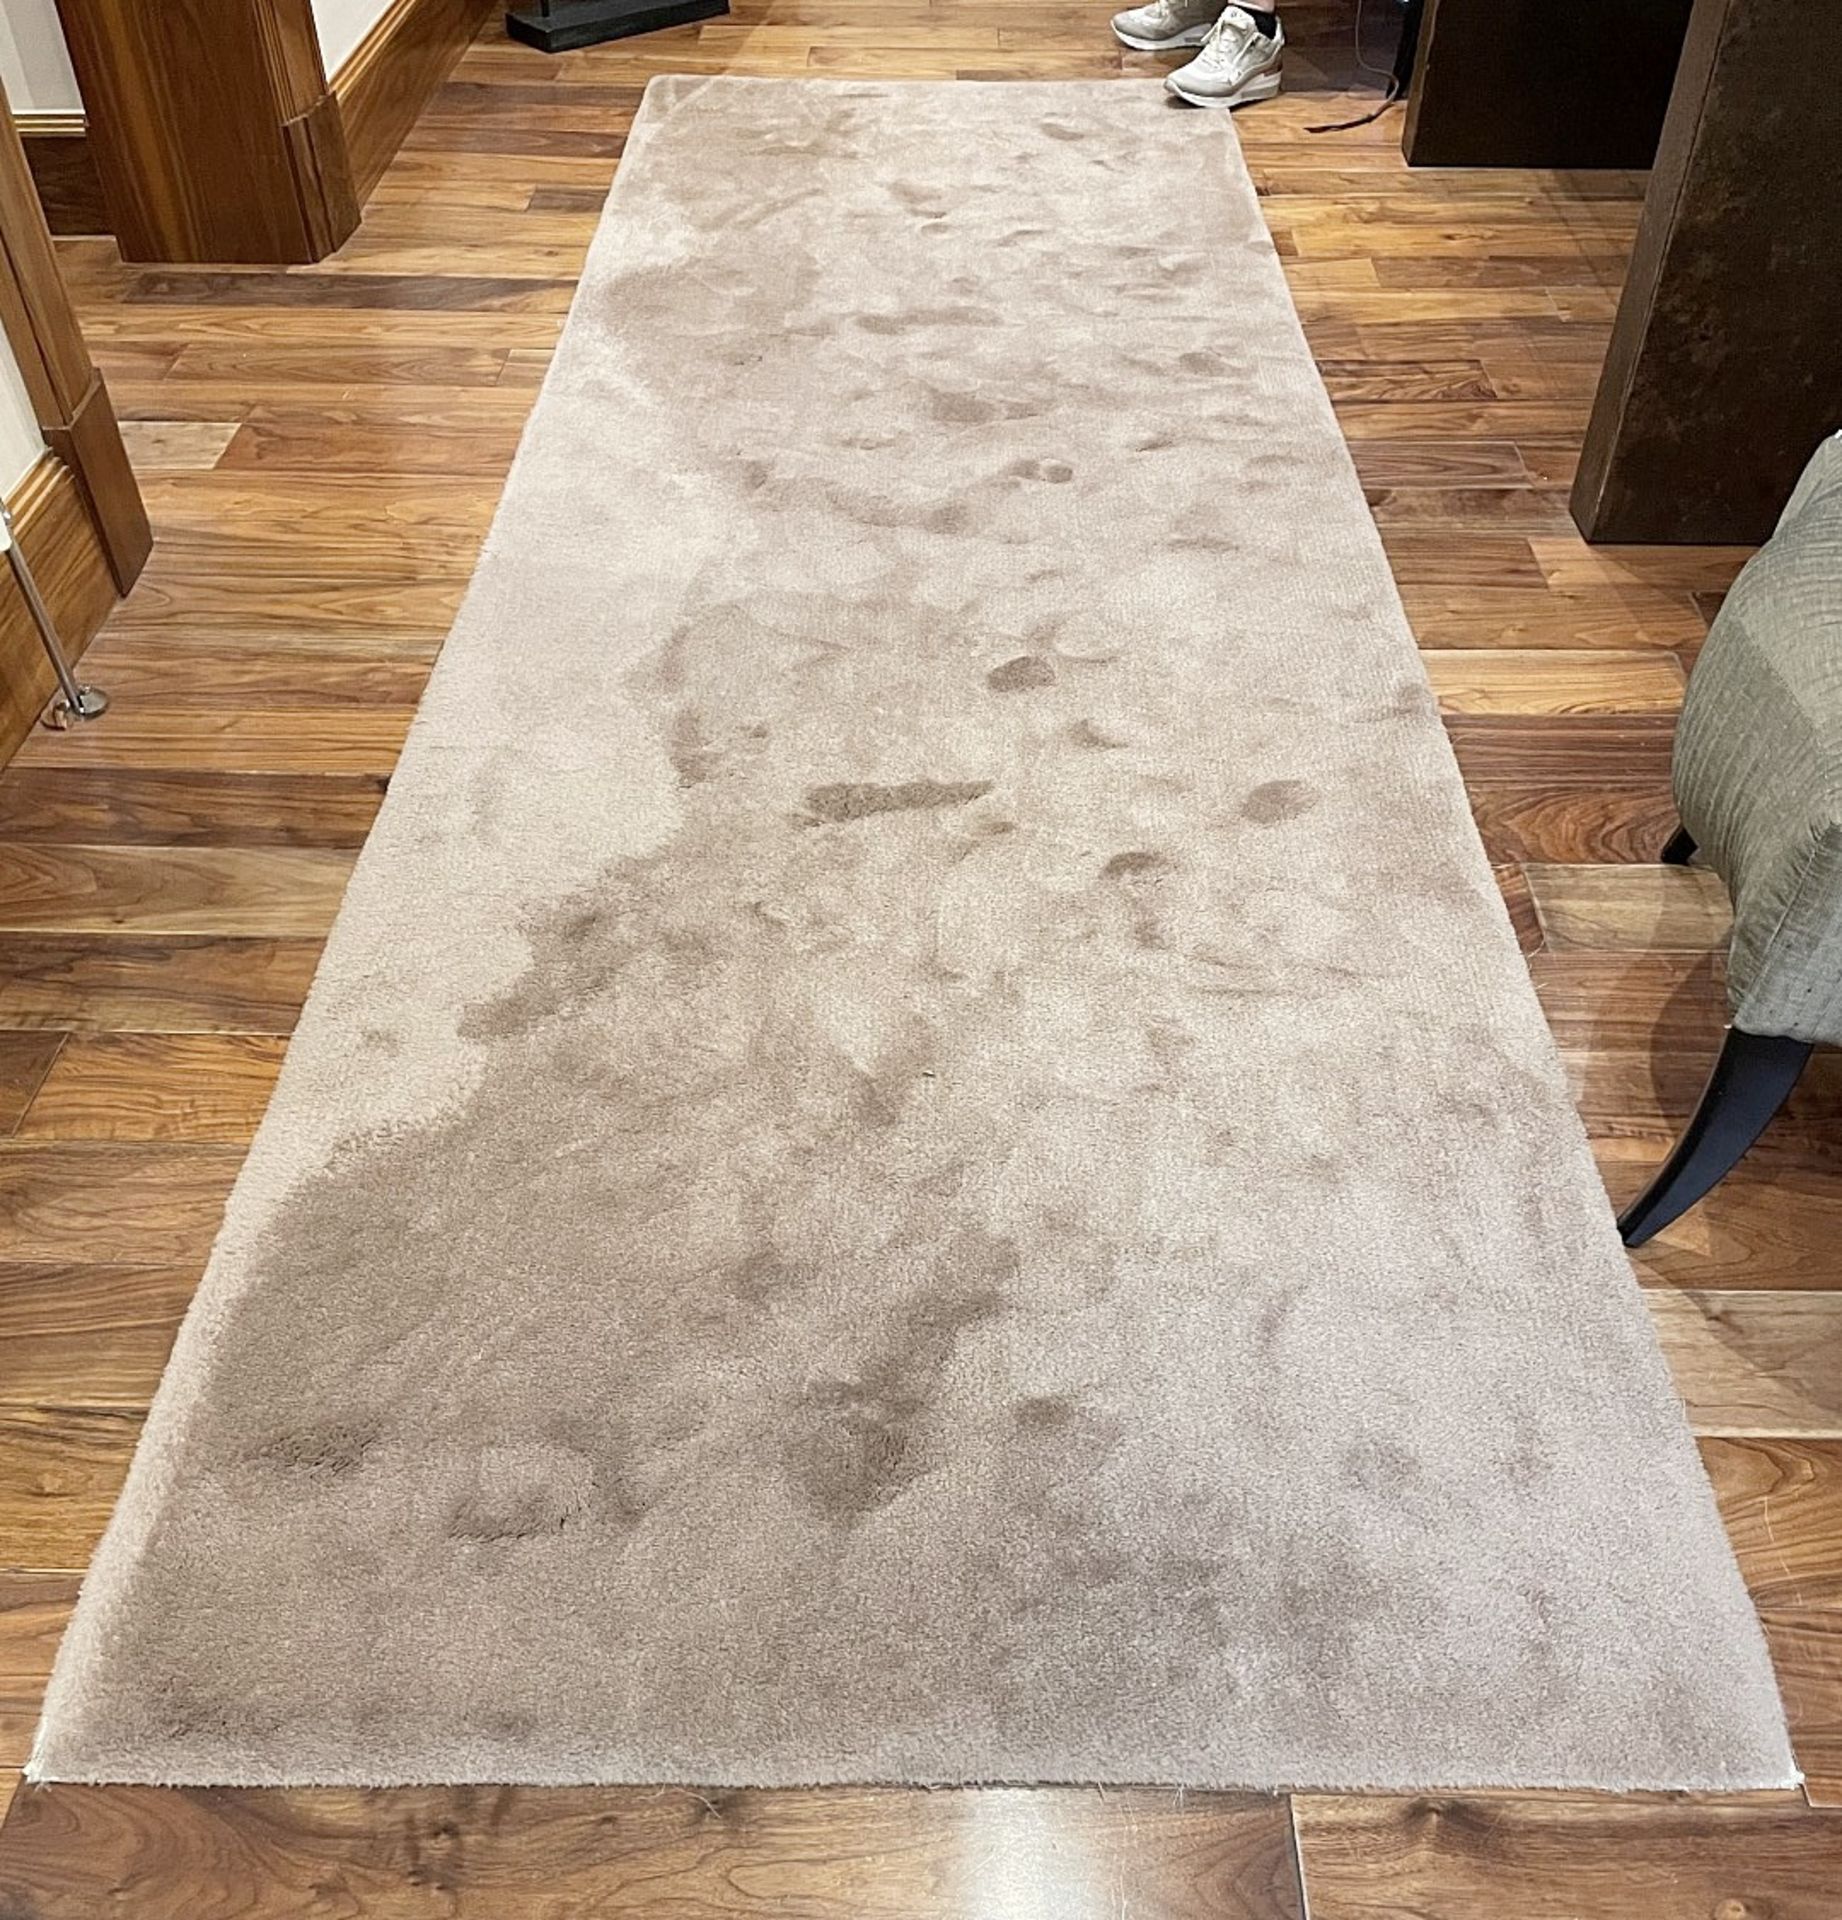 1 x Premium 3.5 Metre Long Carpet Runner  - Dimensions: 325cm x 105cm - Ref: SGV151 - CL672 - NO VAT